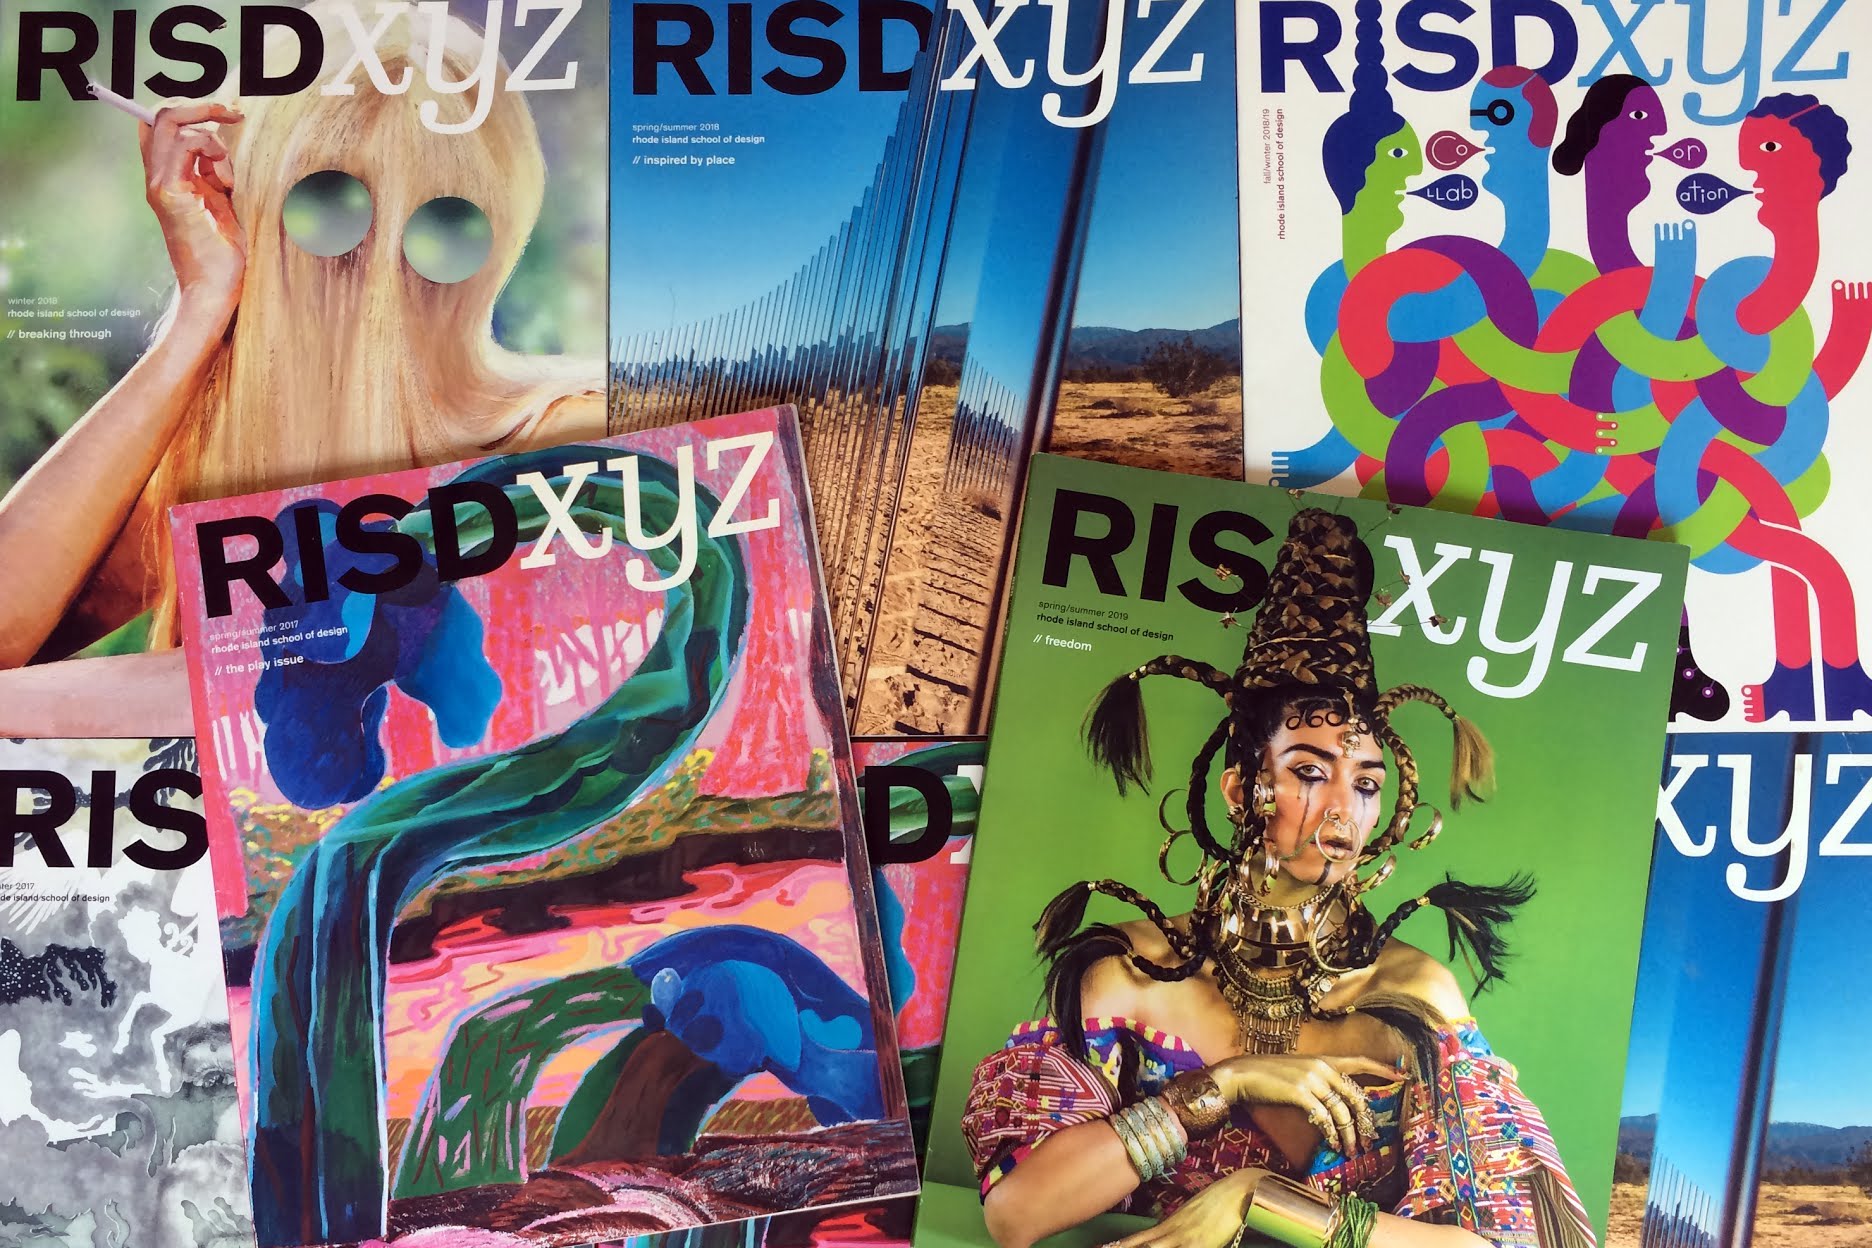 RISD XYZ | Rhode Island School of Design alumni magazine